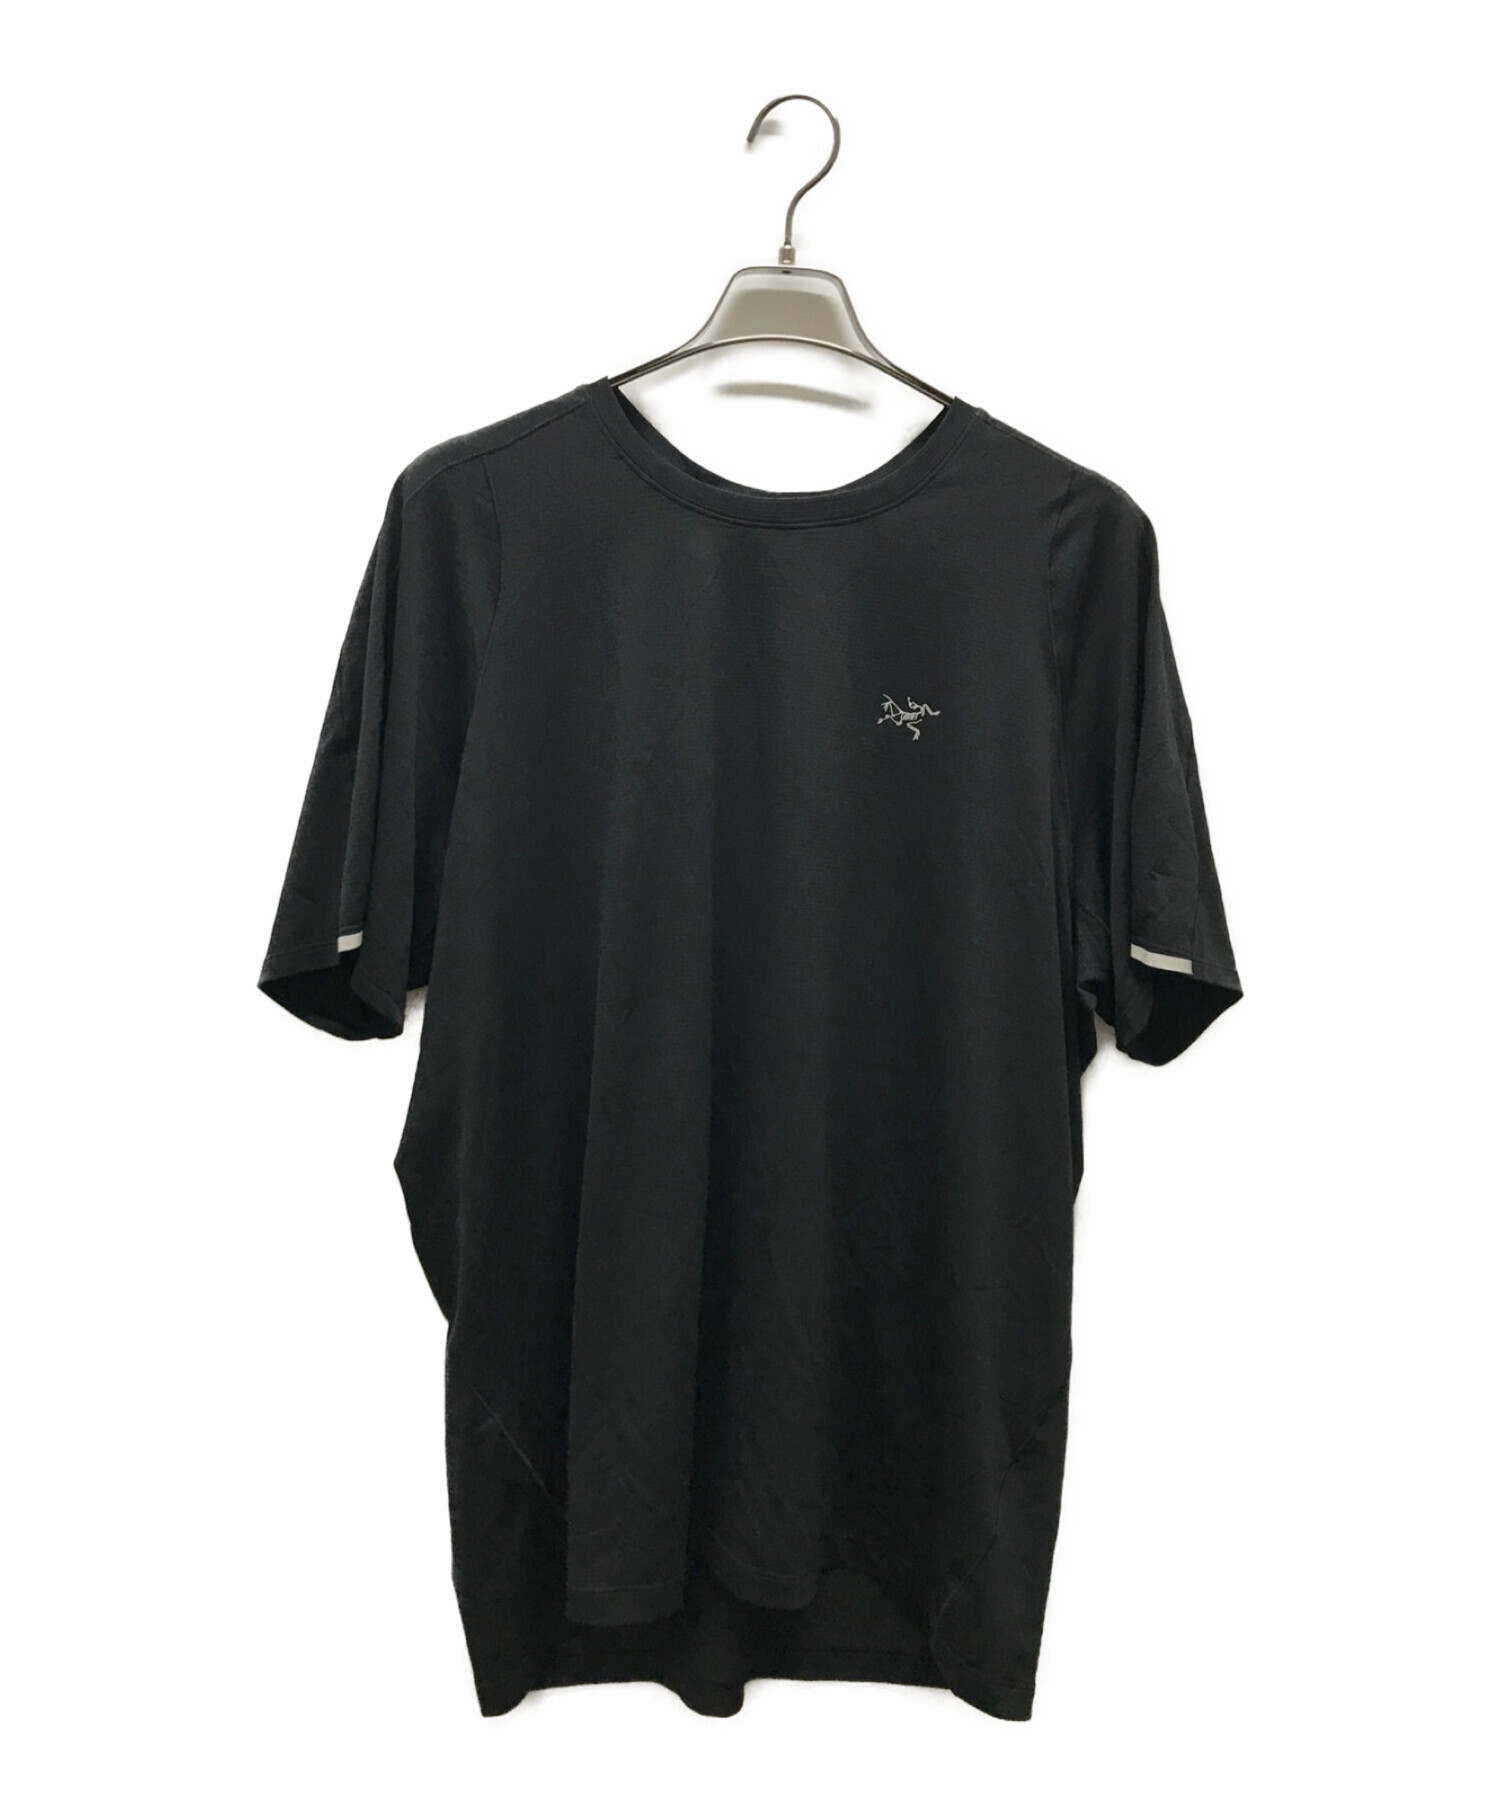 ARC'TERYX (アークテリクス) Tシャツ ブラック サイズ:XL